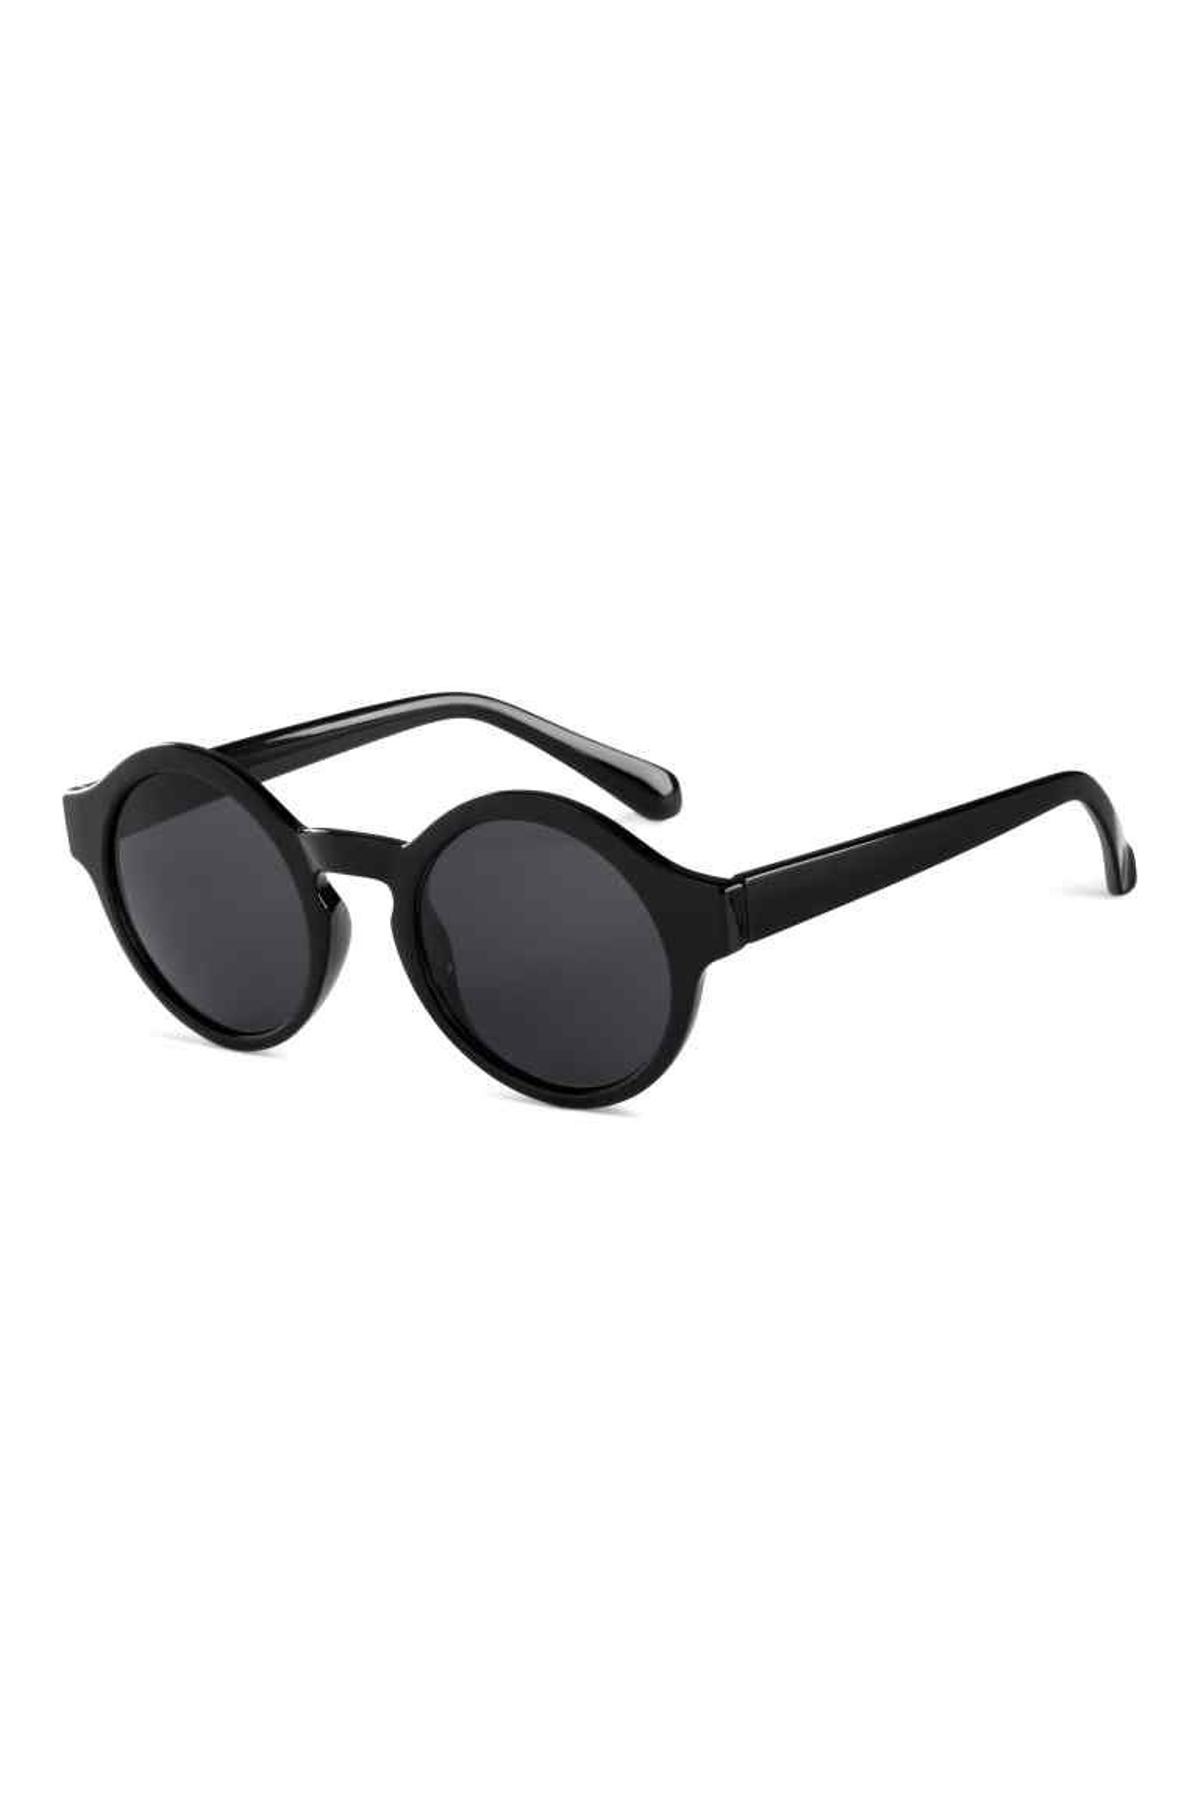 Gafas de sol, H&amp;M (7,99€)